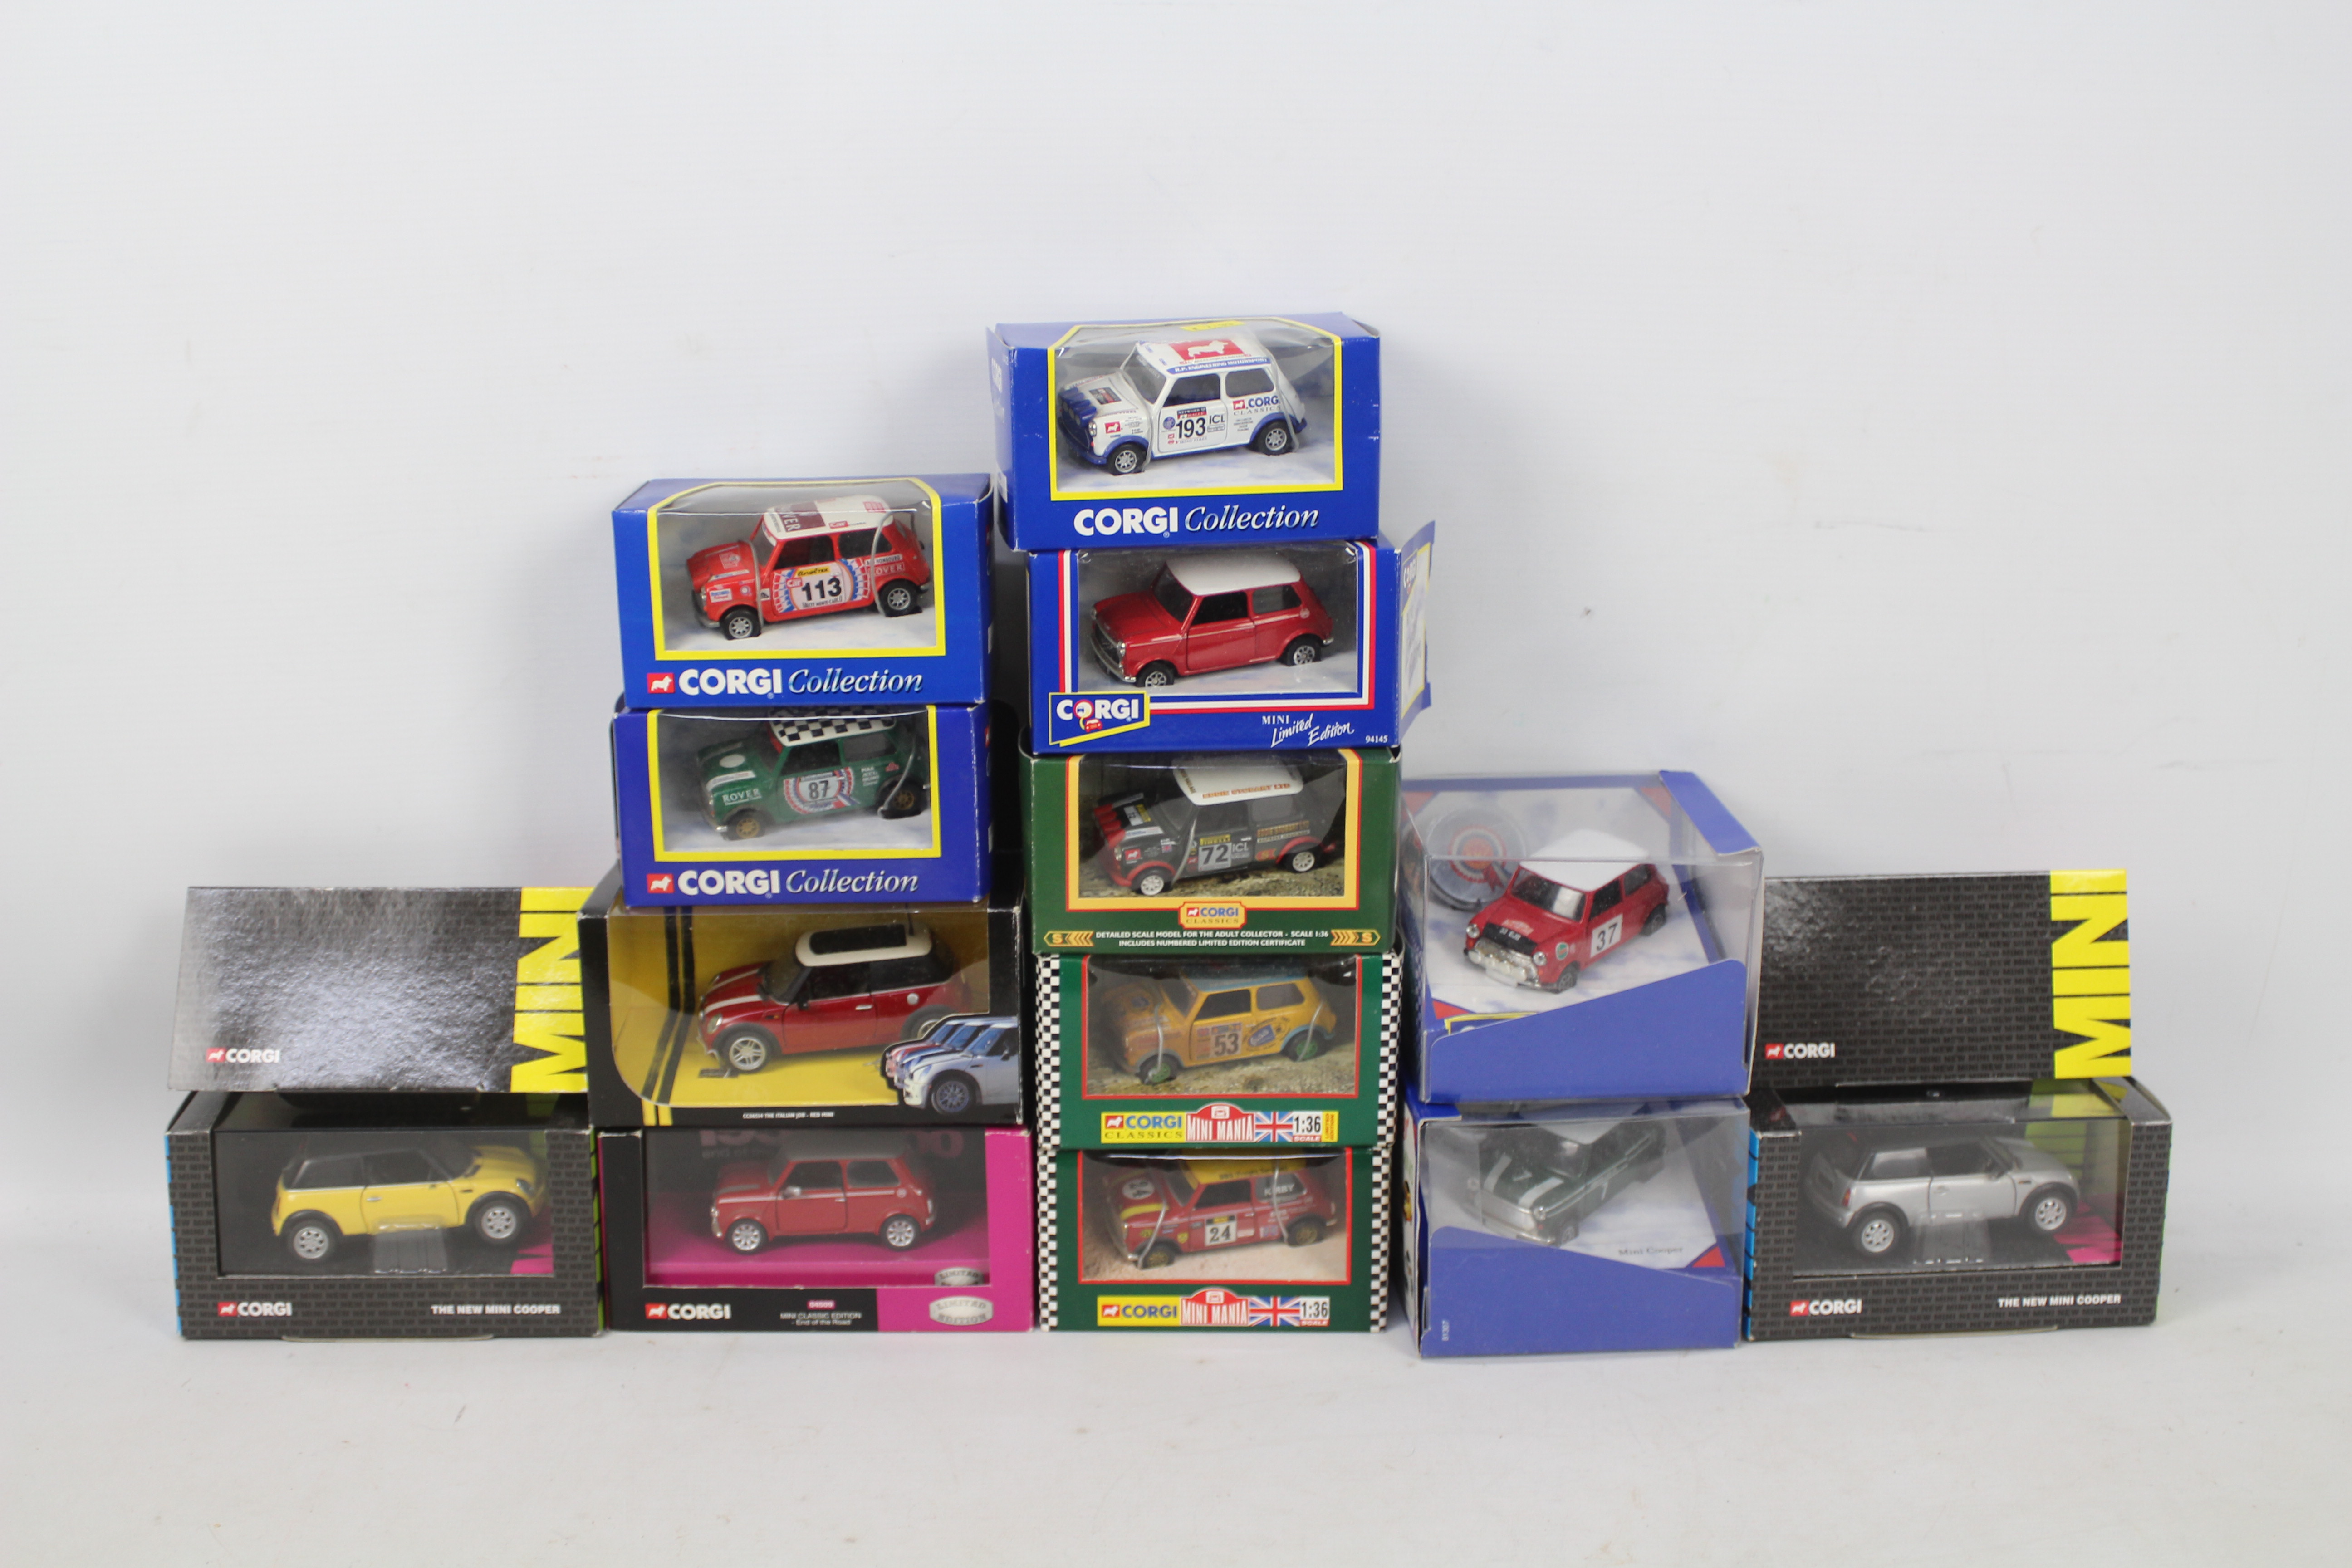 Corgi - Corgi Classics - A boxed collection of 13 1:43 scale diecast model Minis from various Corgi